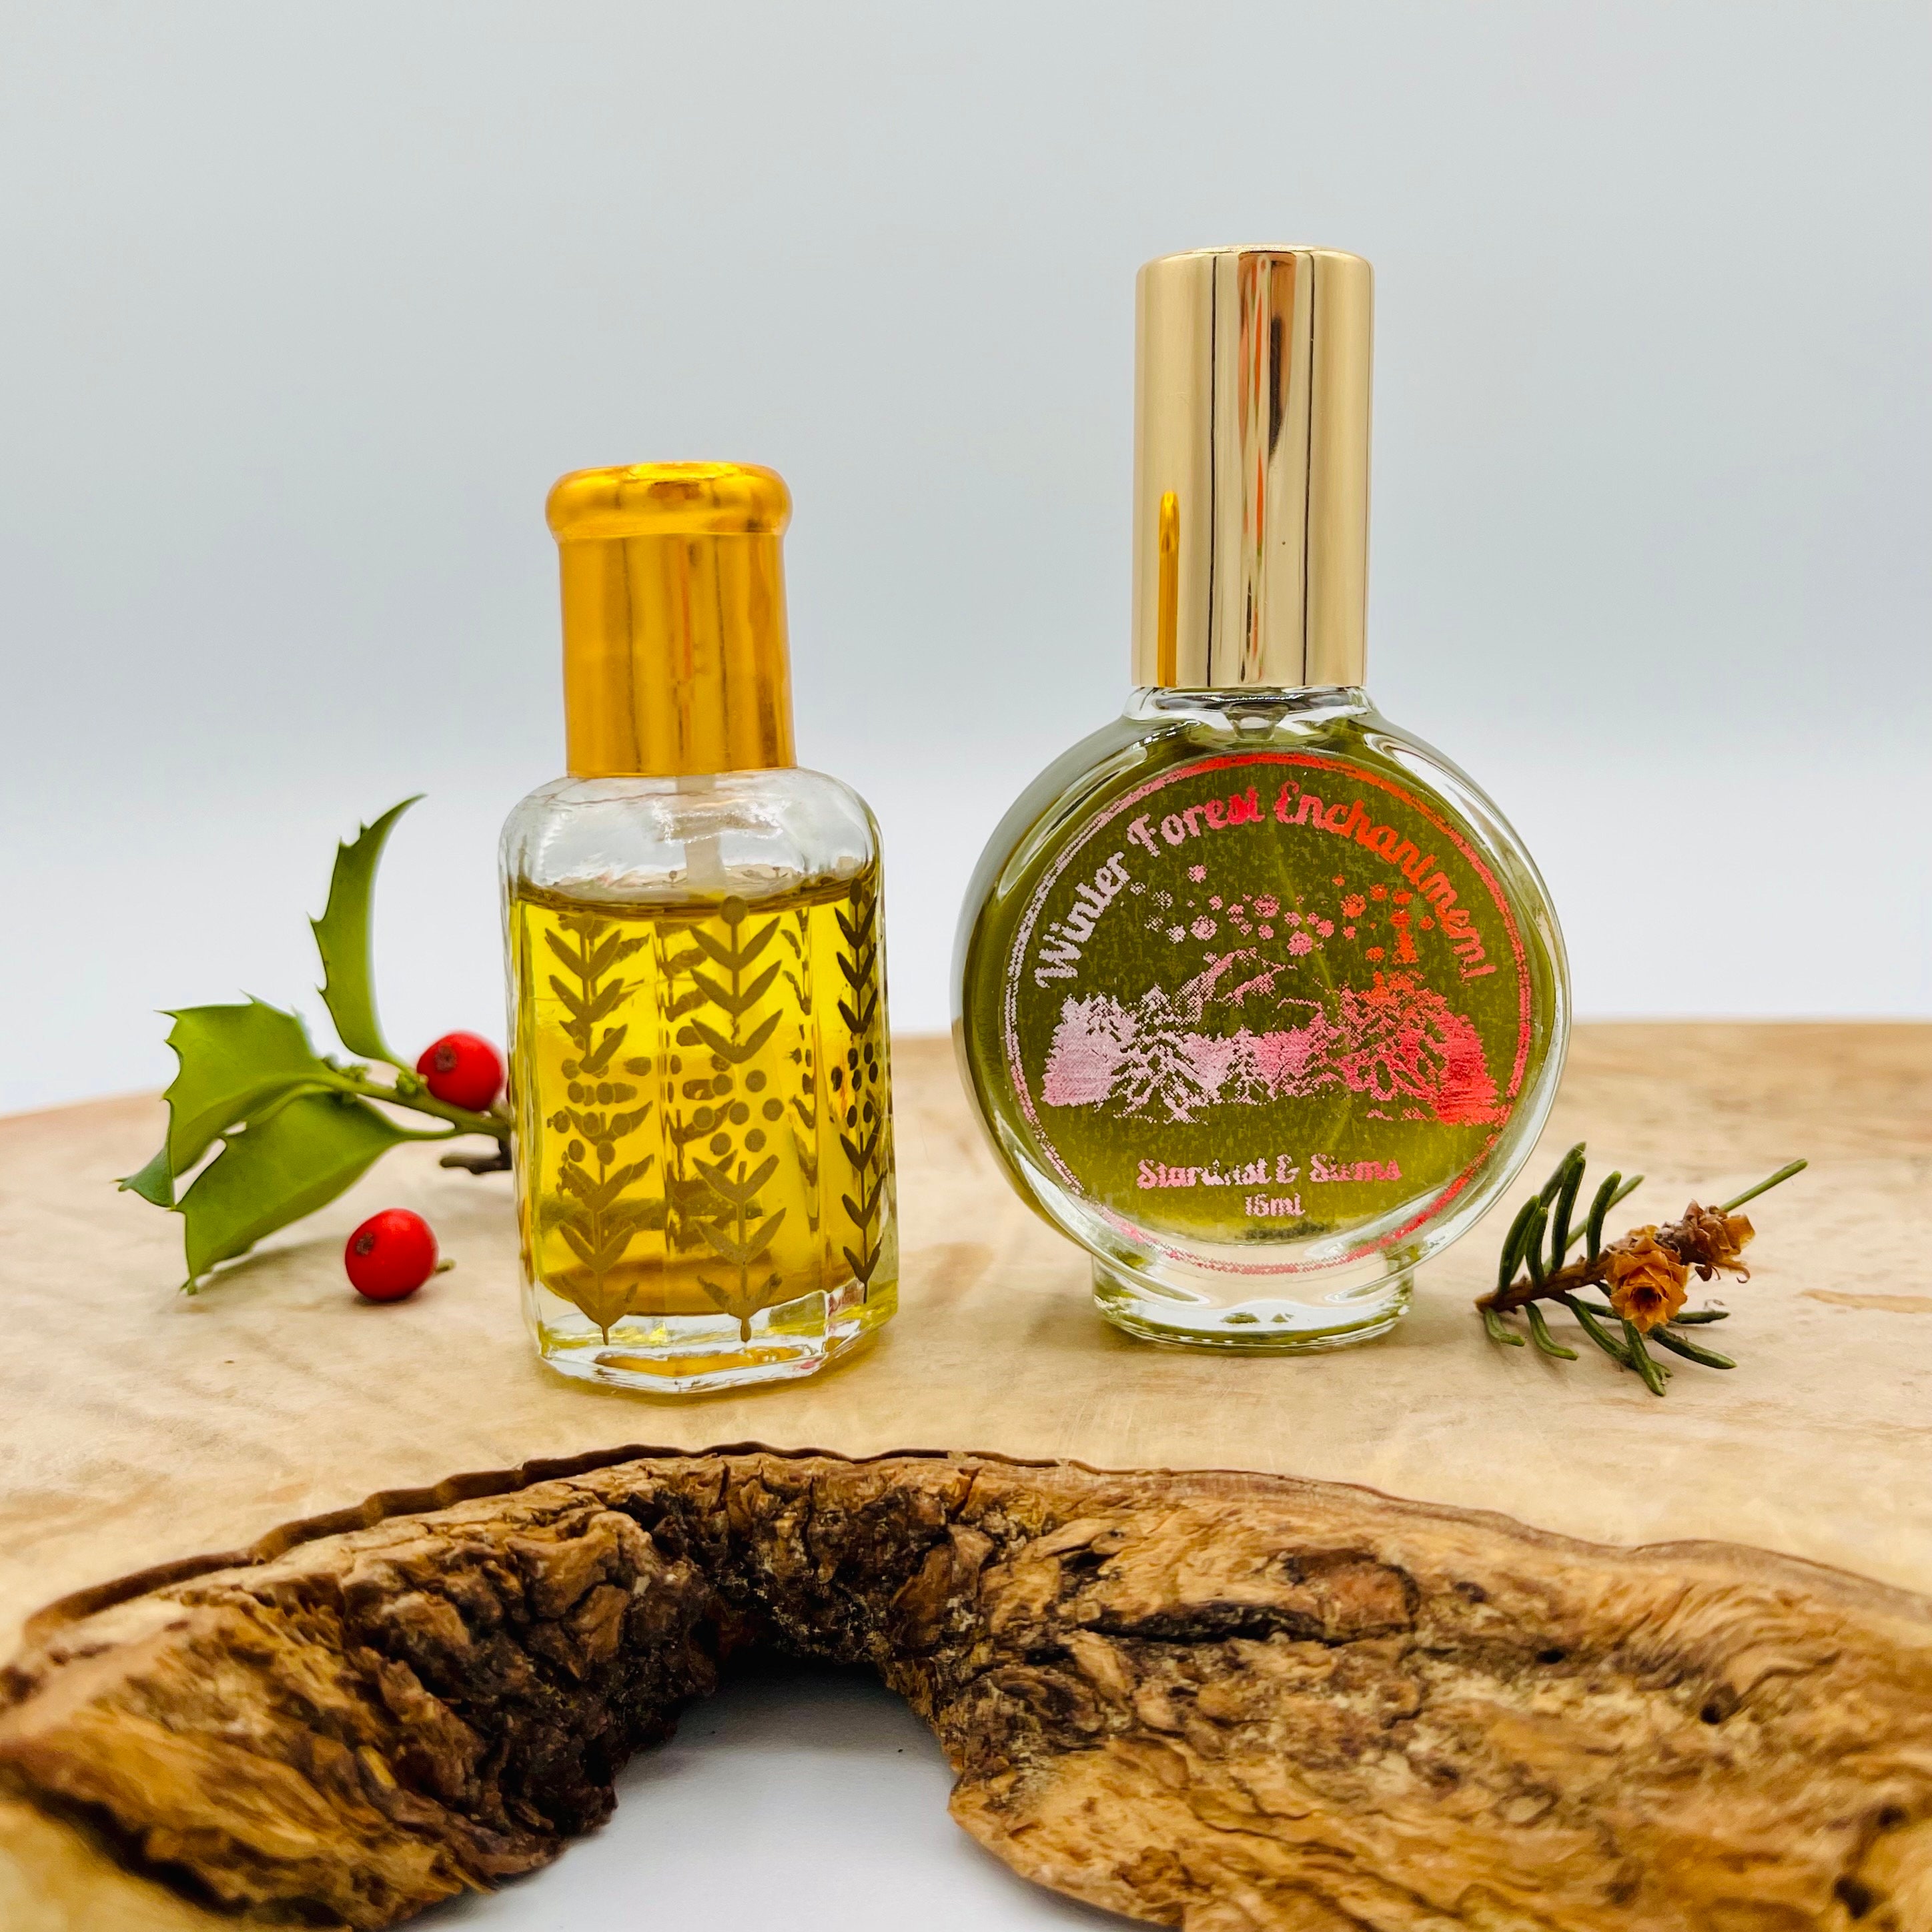 Body Oil SAMPLES - Lucretia's Body Oils & Sprays